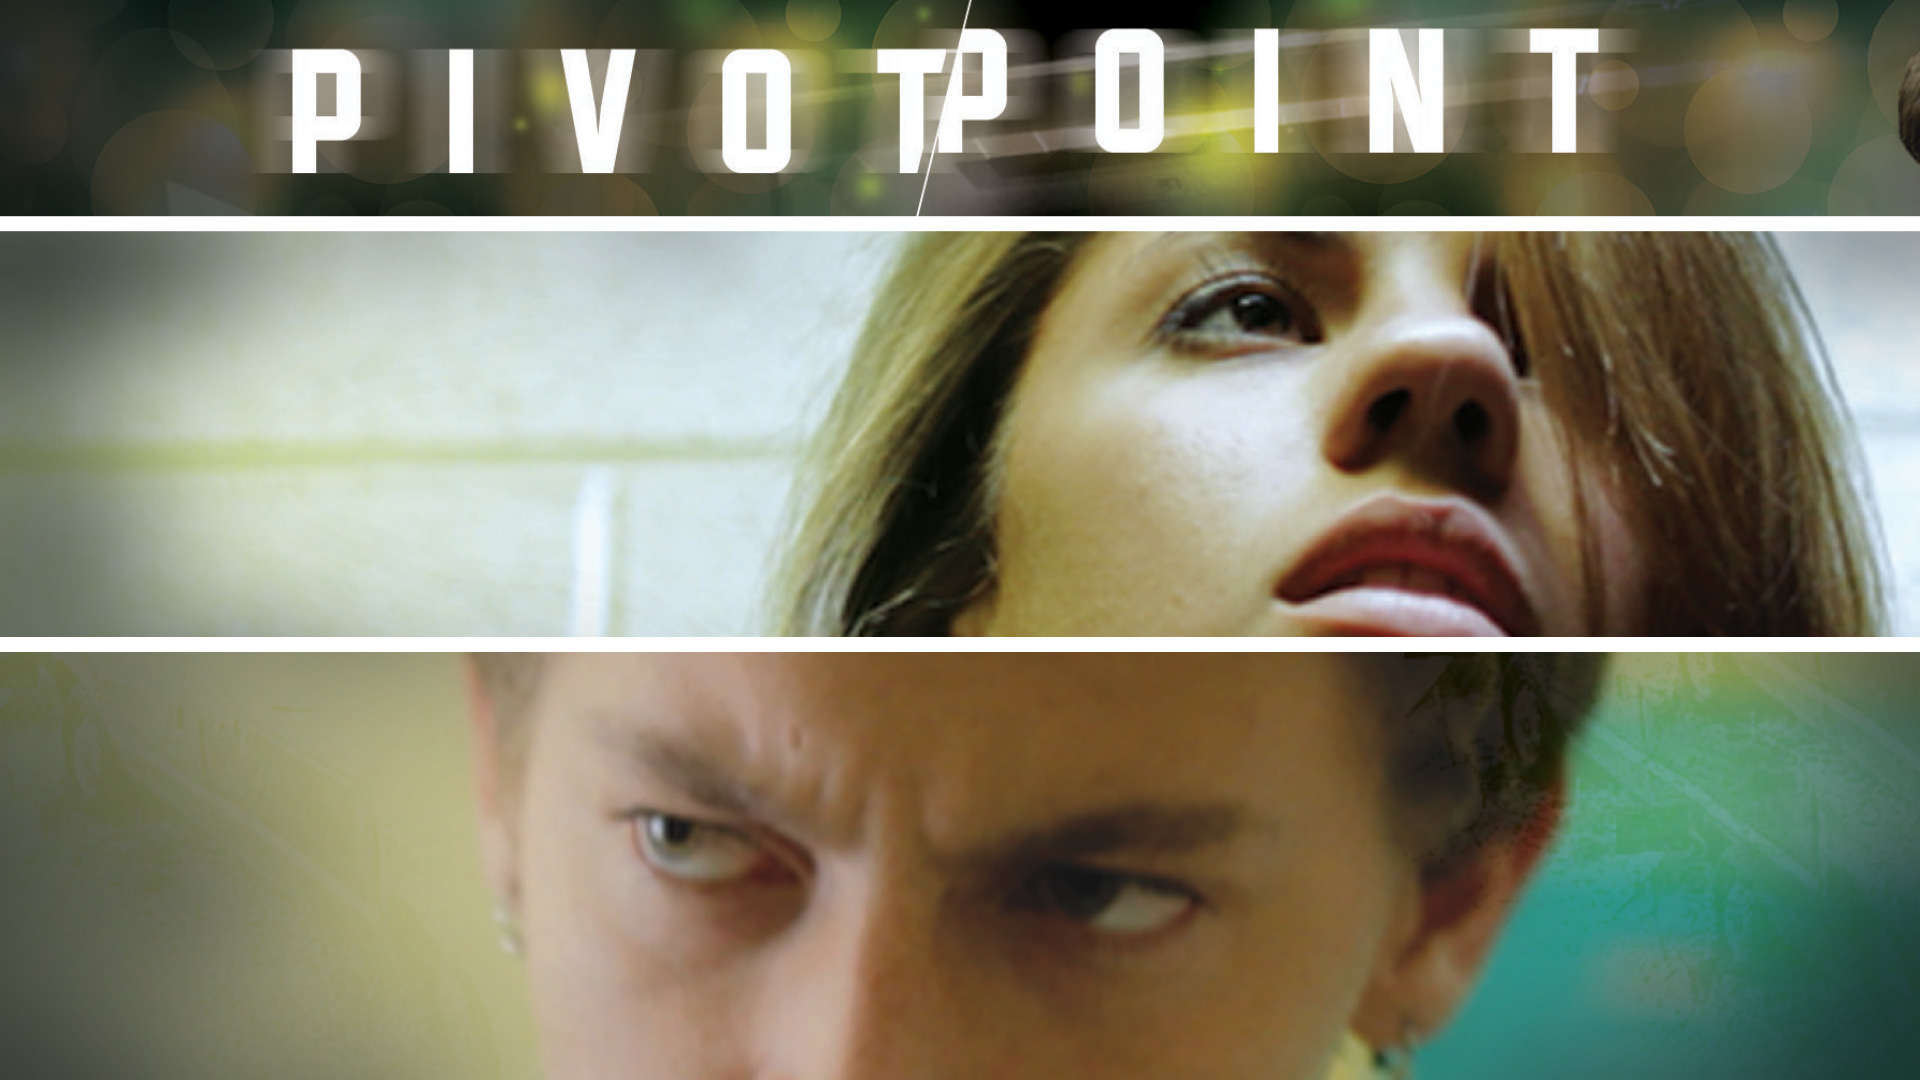 Pivot Point. A psychological drama that follows four high schoolers down a dark ride.